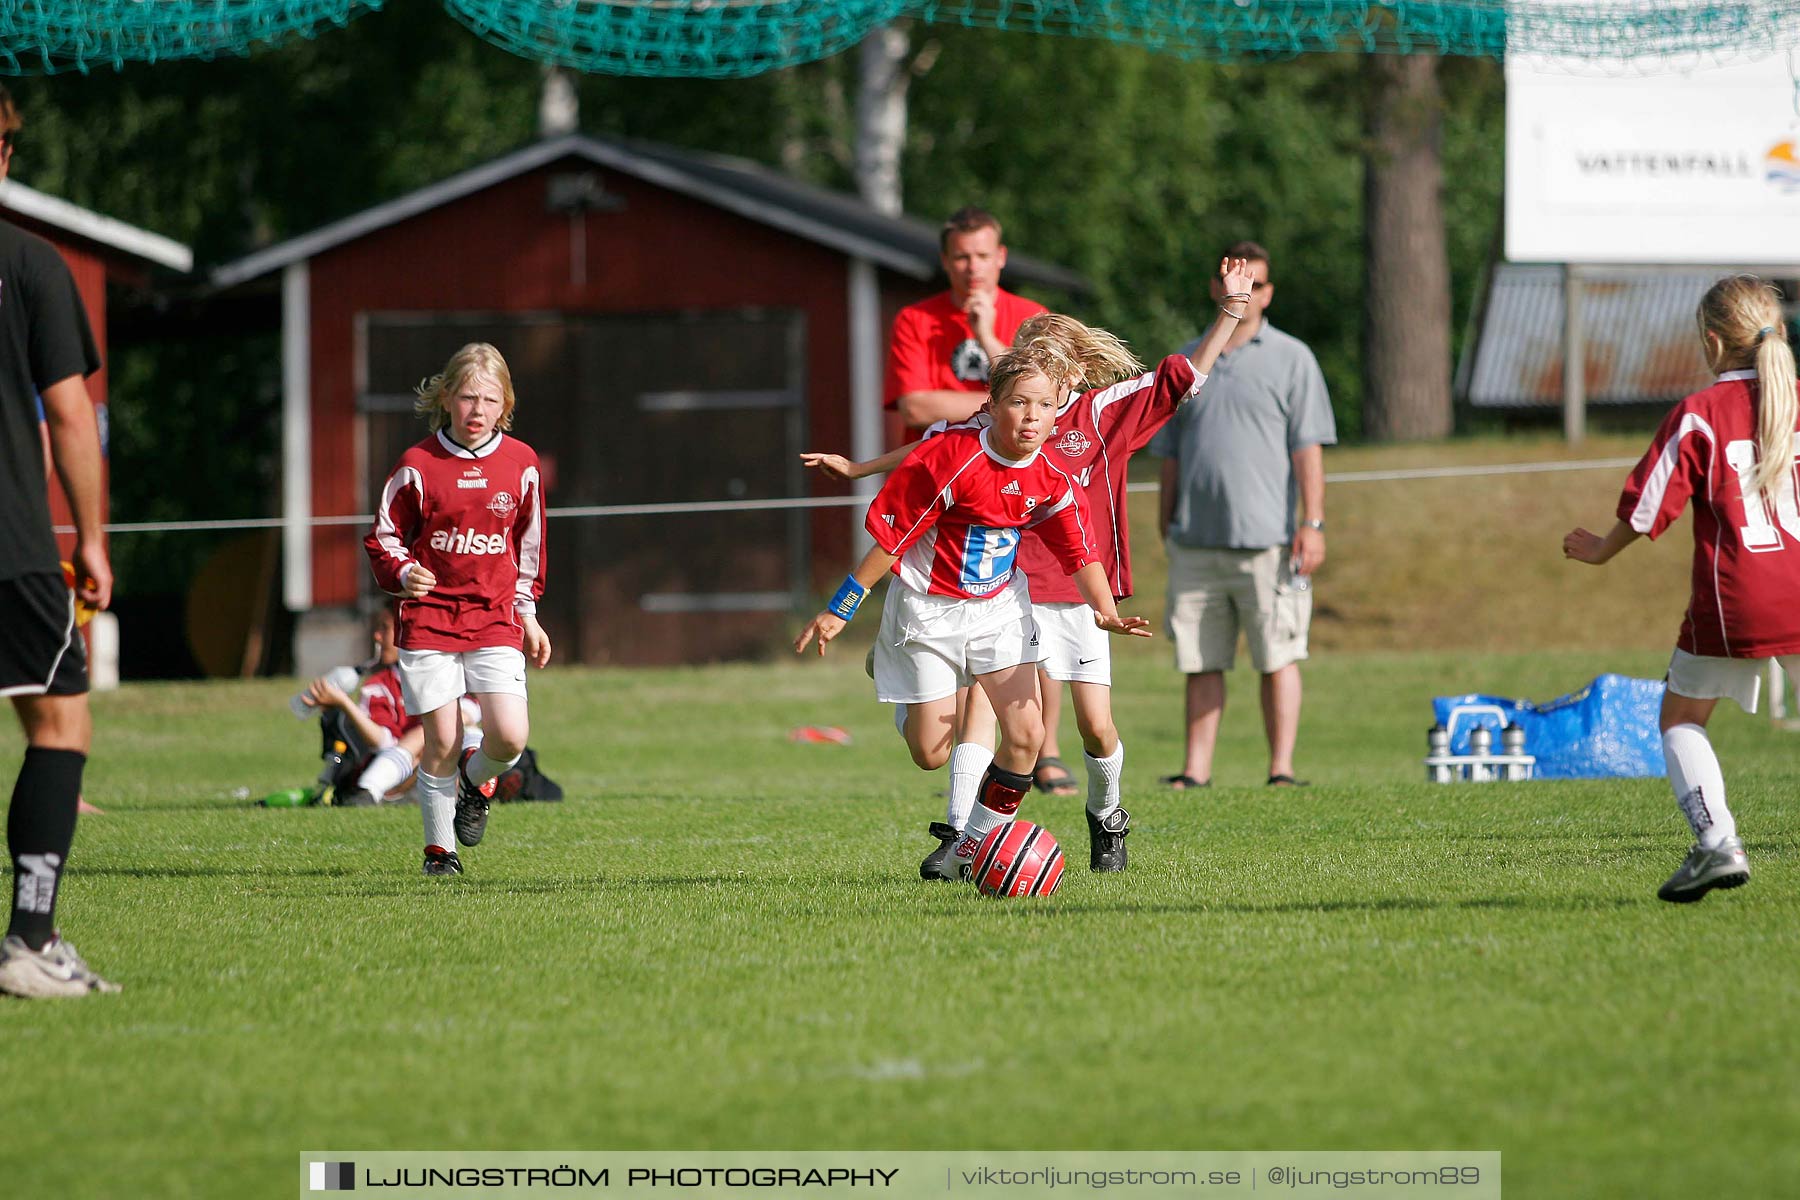 Ulvacupen 2006,mix,Åbrovallen,Ulvåker,Sverige,Fotboll,,2006,147426